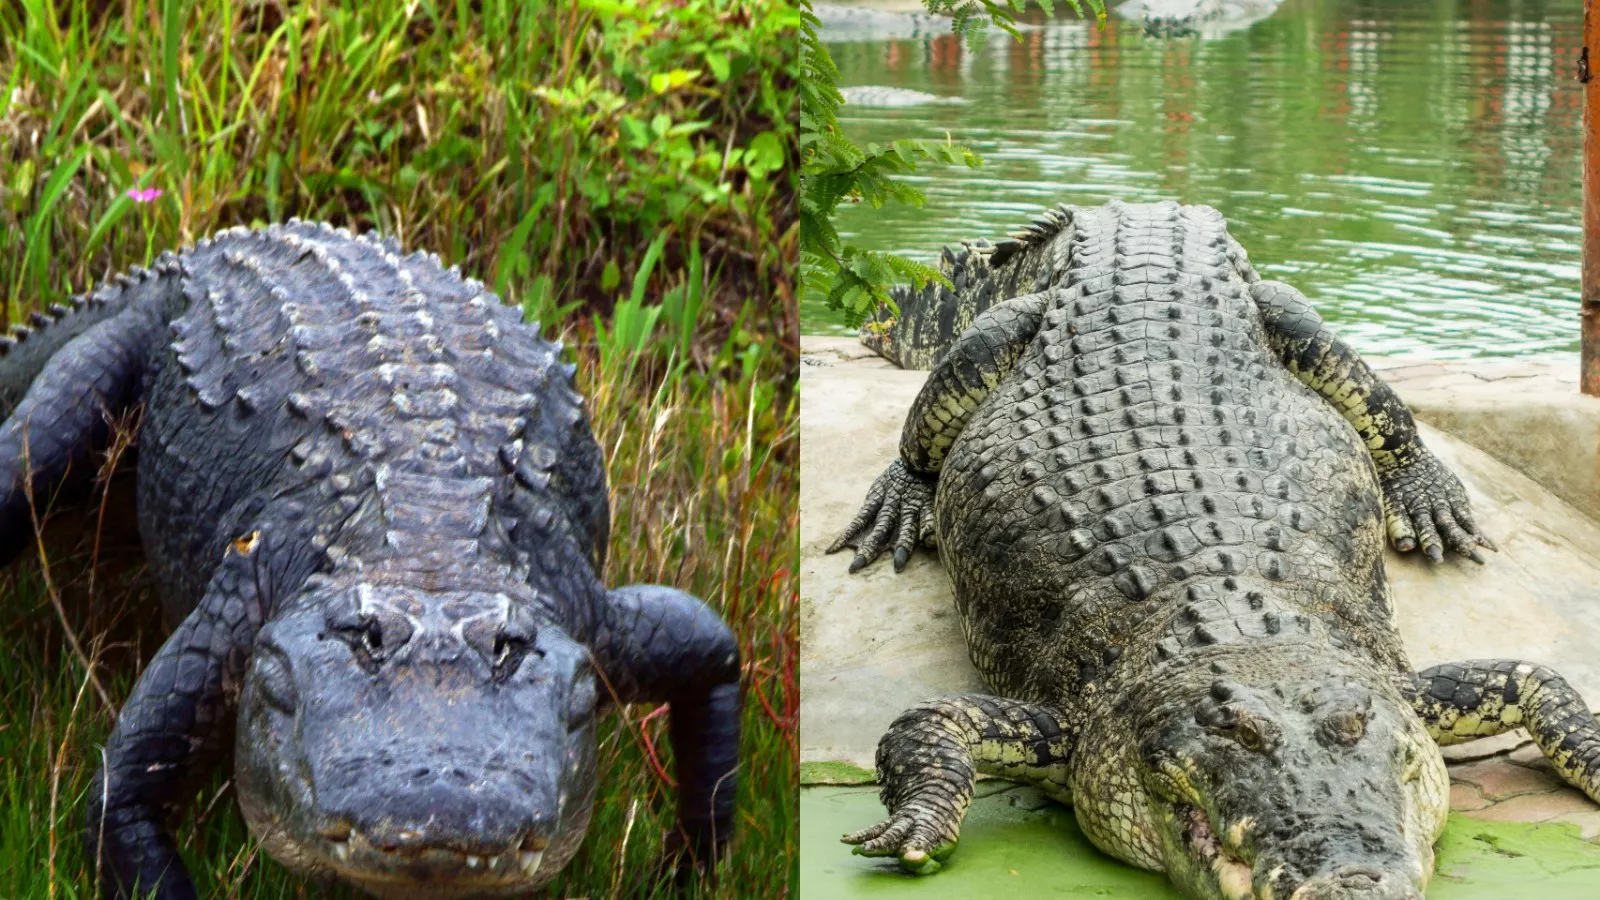 Does Florida Have Alligators and Crocodiles?